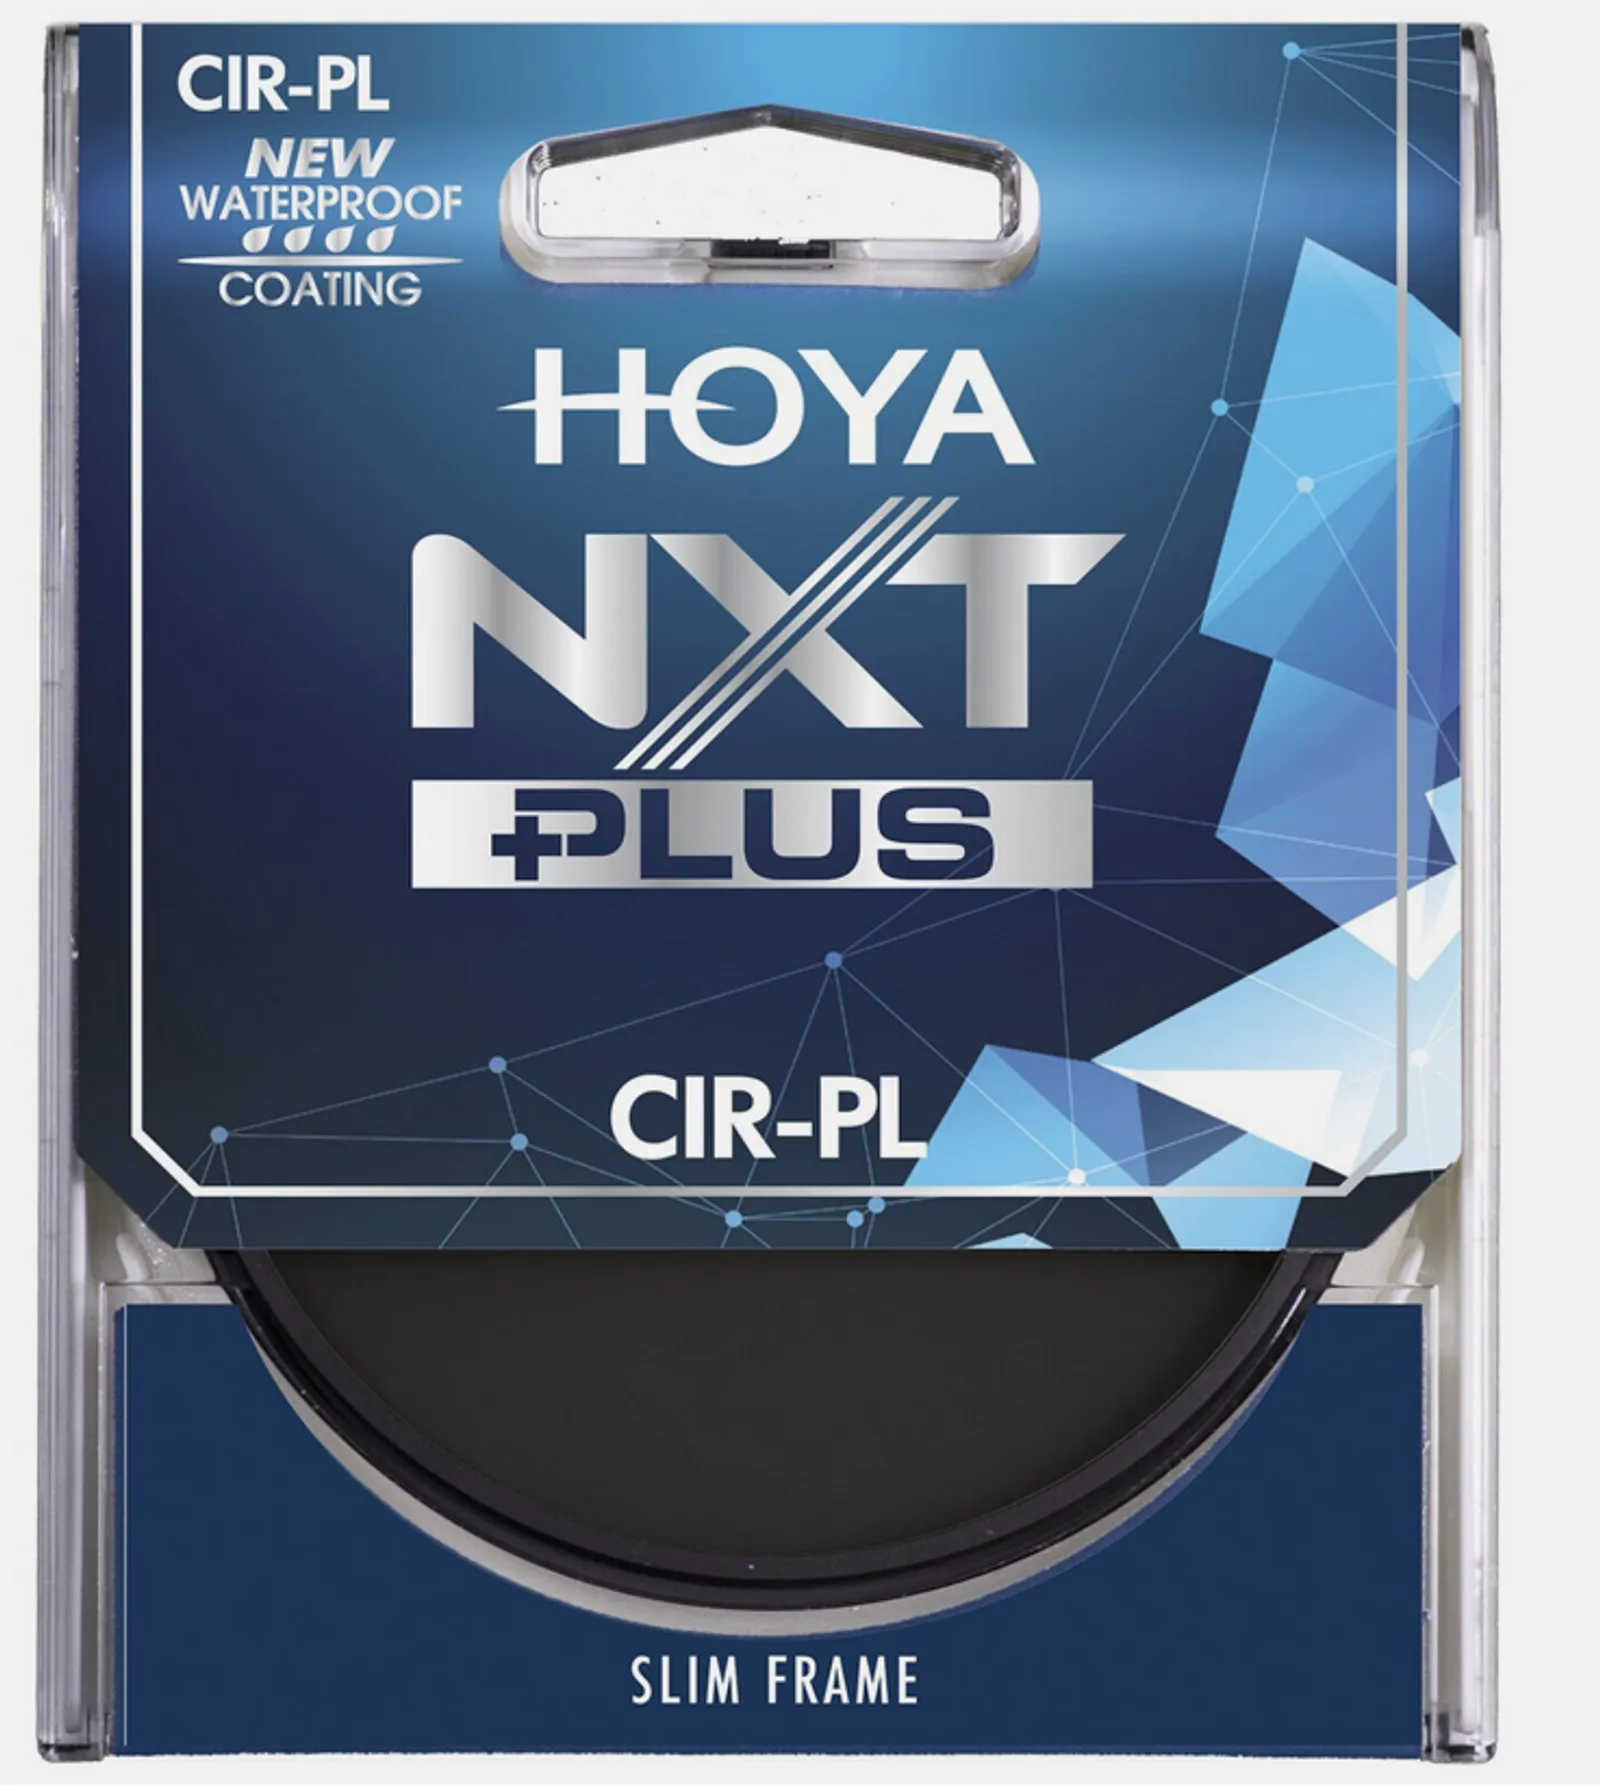 Hoya NXT Plus 46mm Circular Polarizer Filter